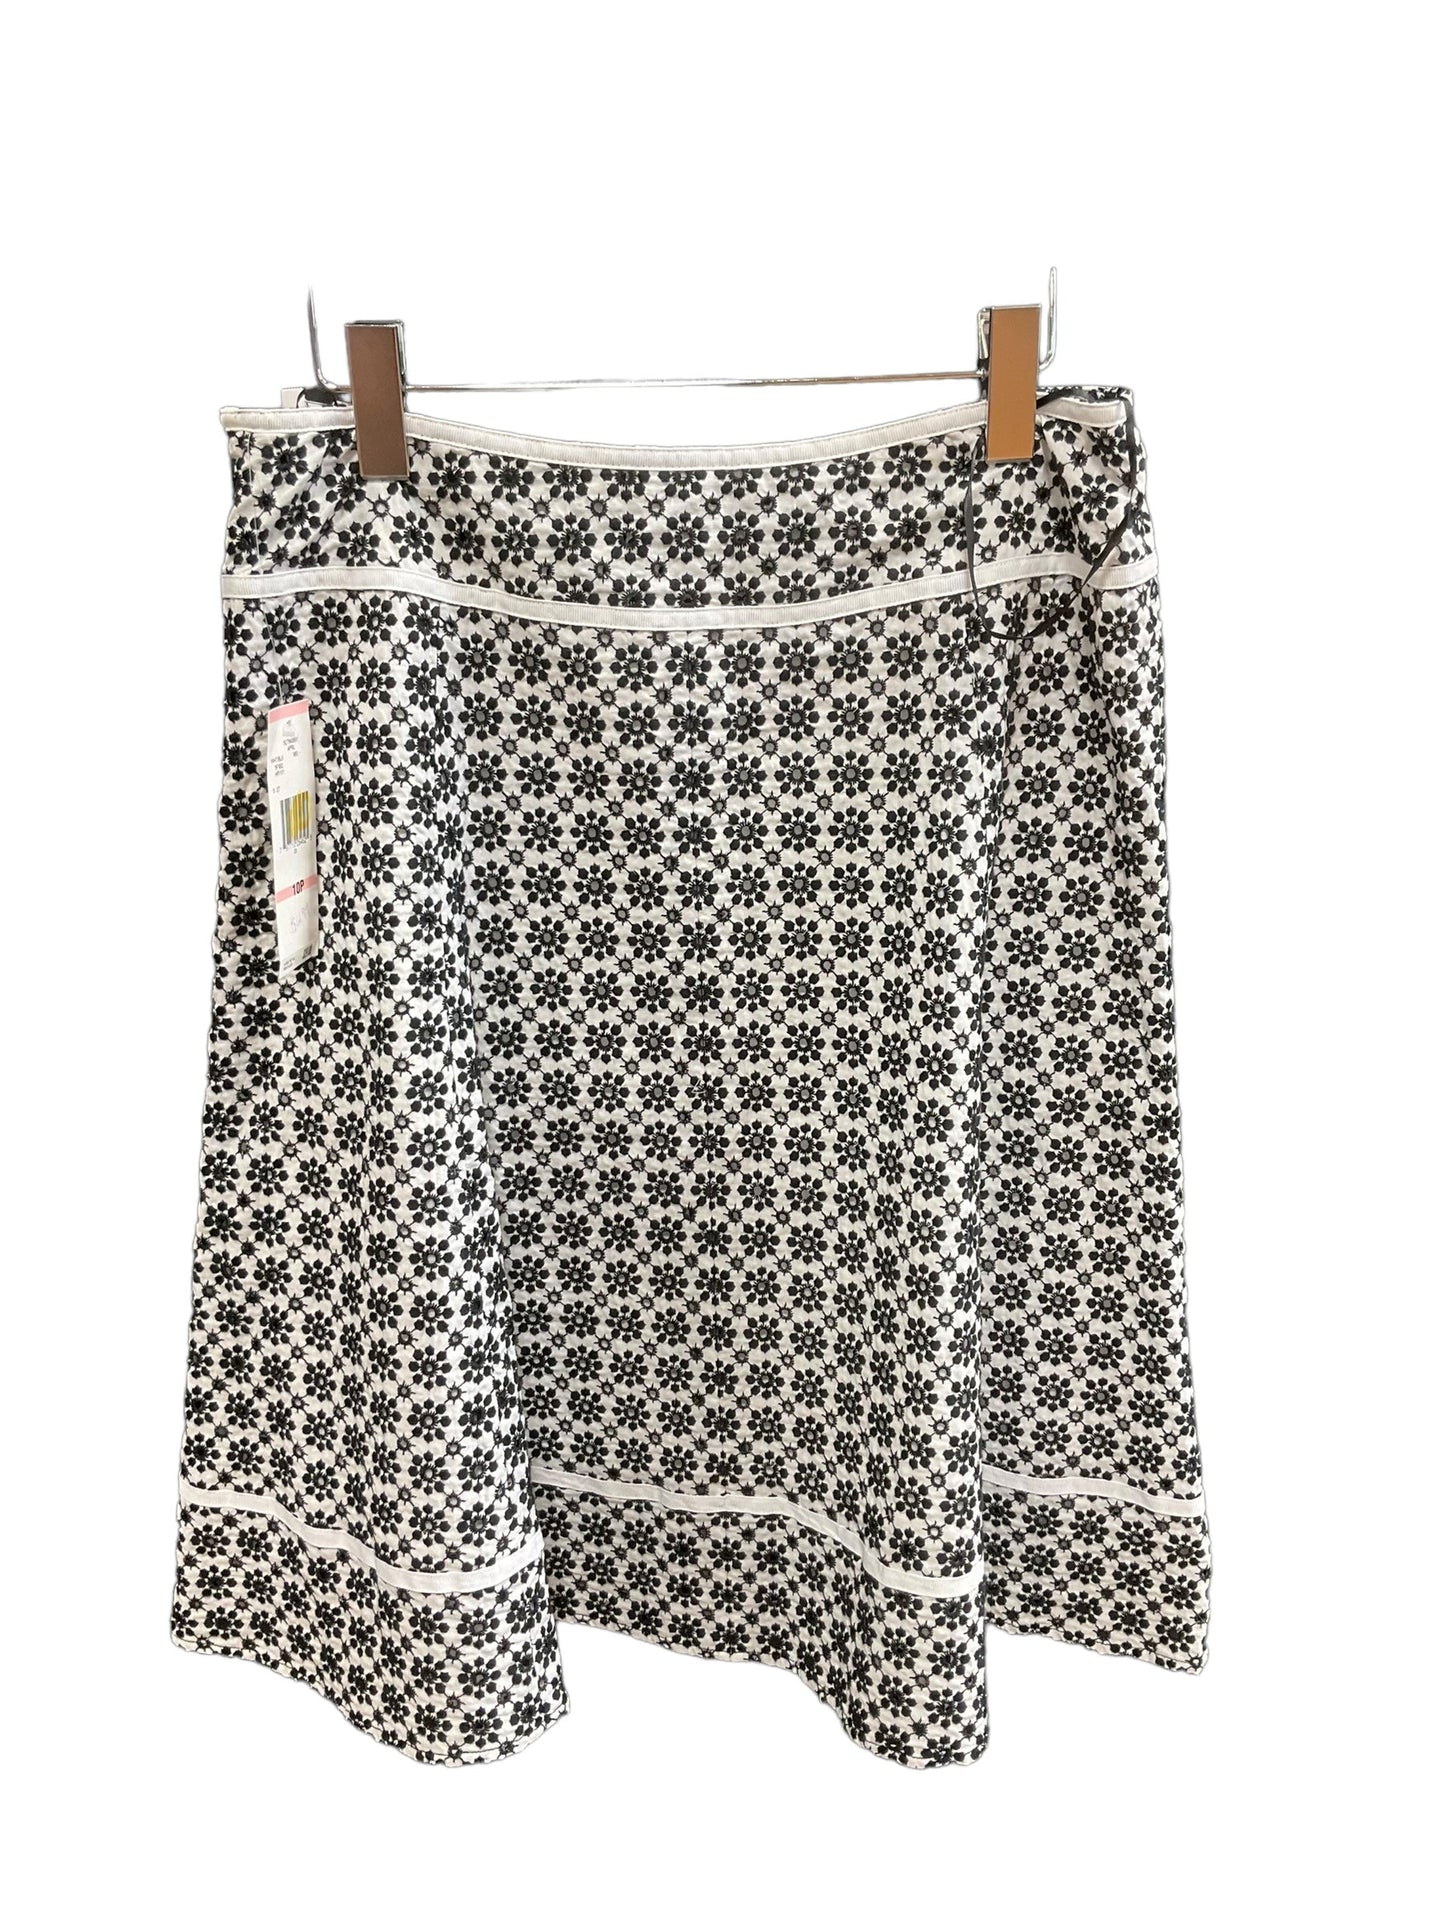 Skirt Midi By Jones New York  Size: 10